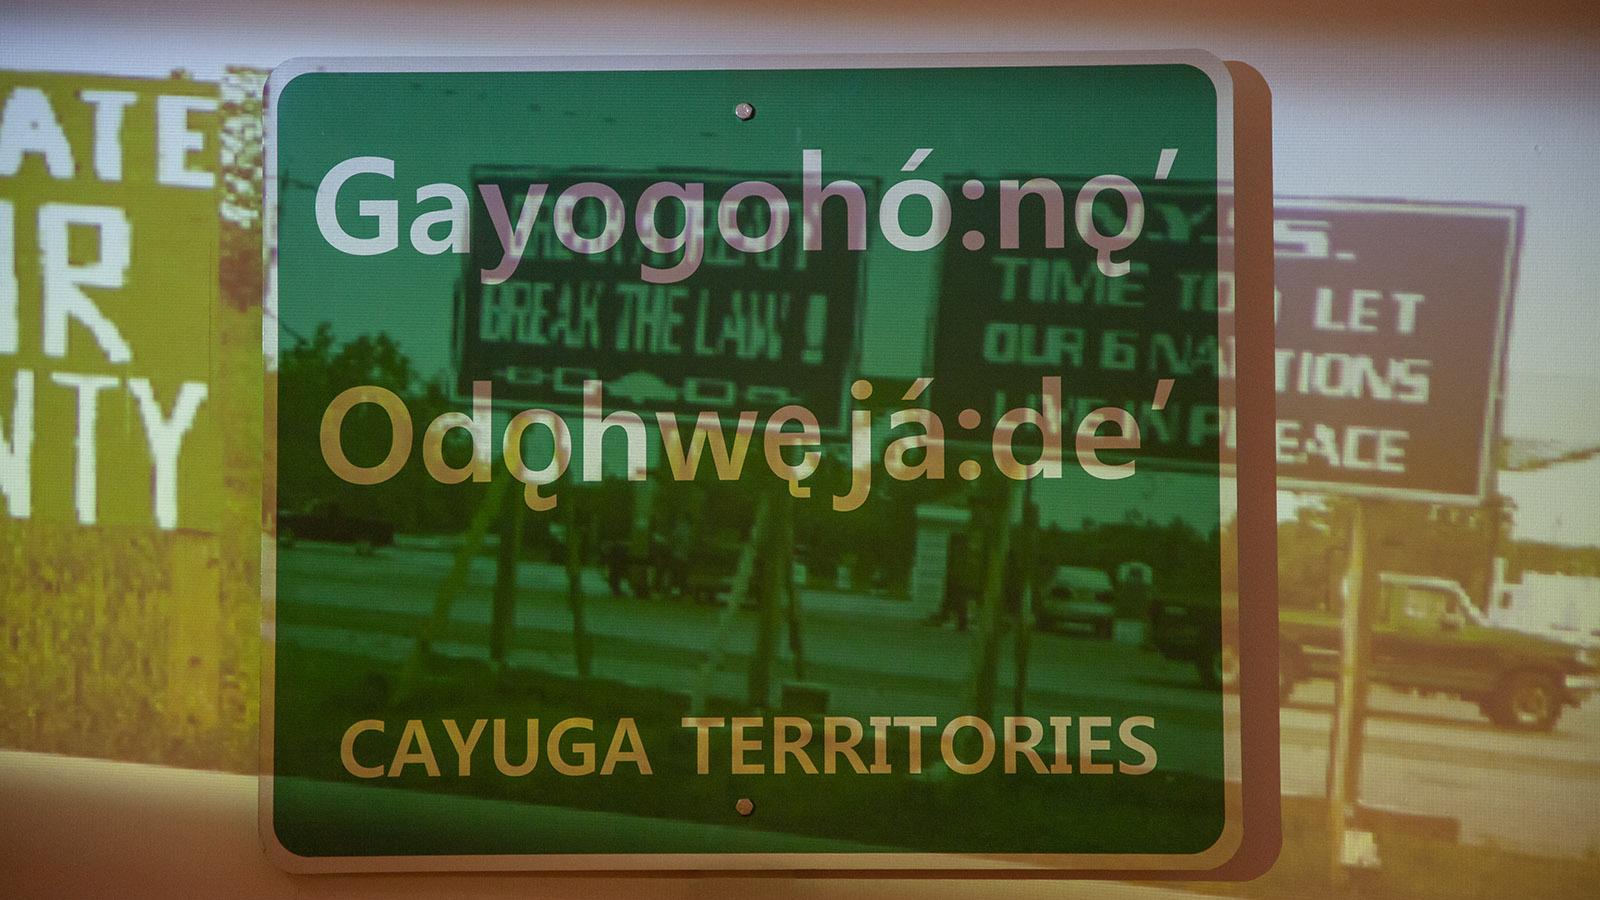 Jolene Rickard  Fight for the Line image of sign with Gayogoho:no Odohweja:de Cayuga Terrirtories